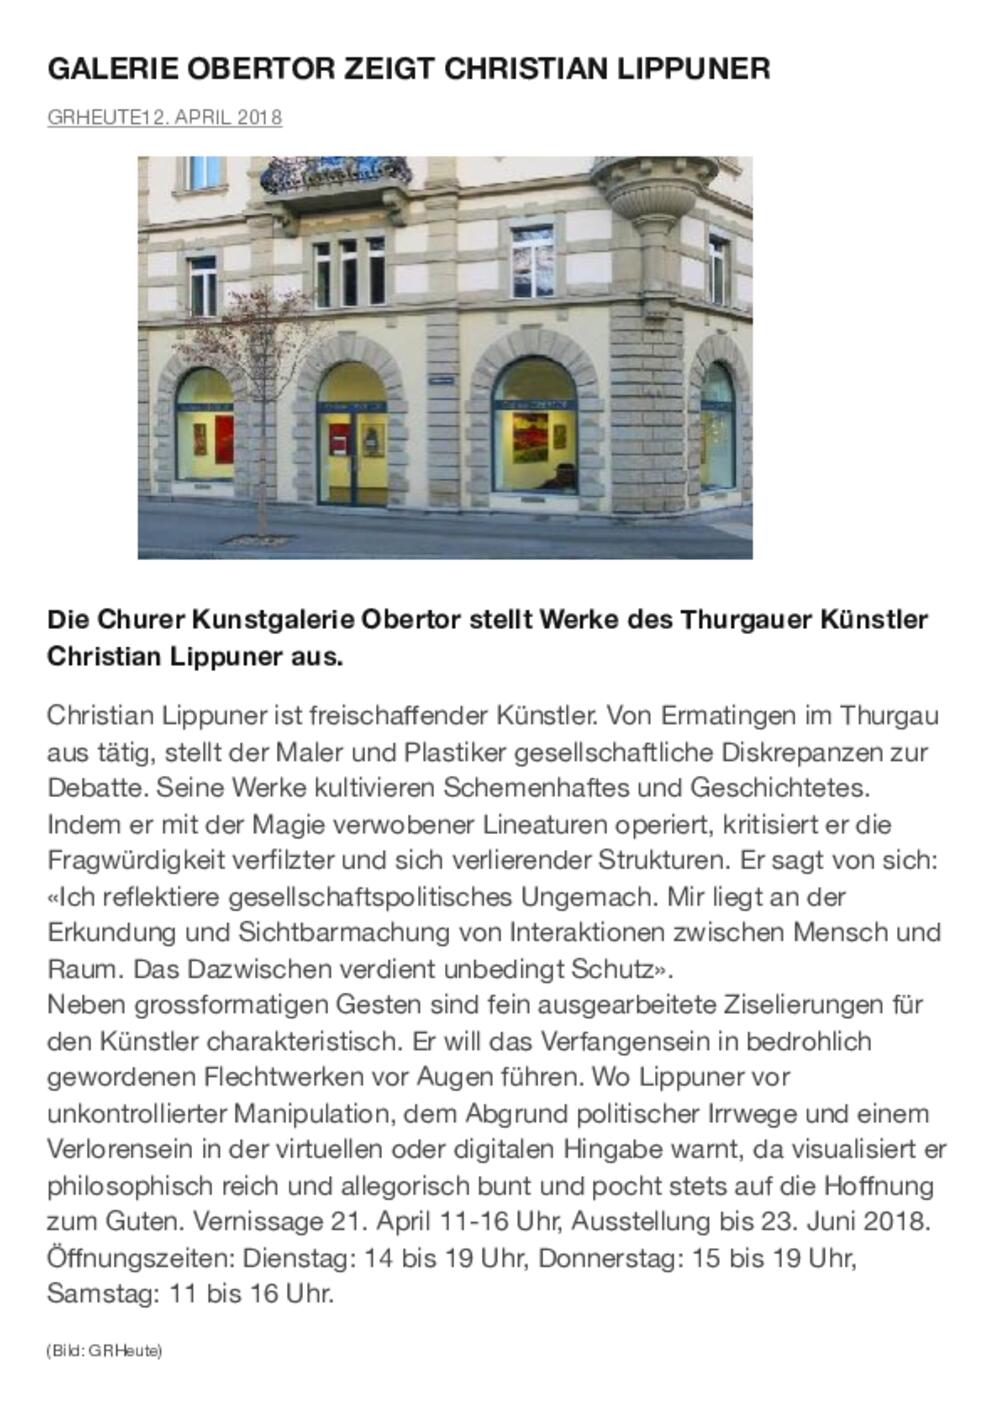 GRHEUTE Galerie OBERTOR zeigt Christian Lippuner